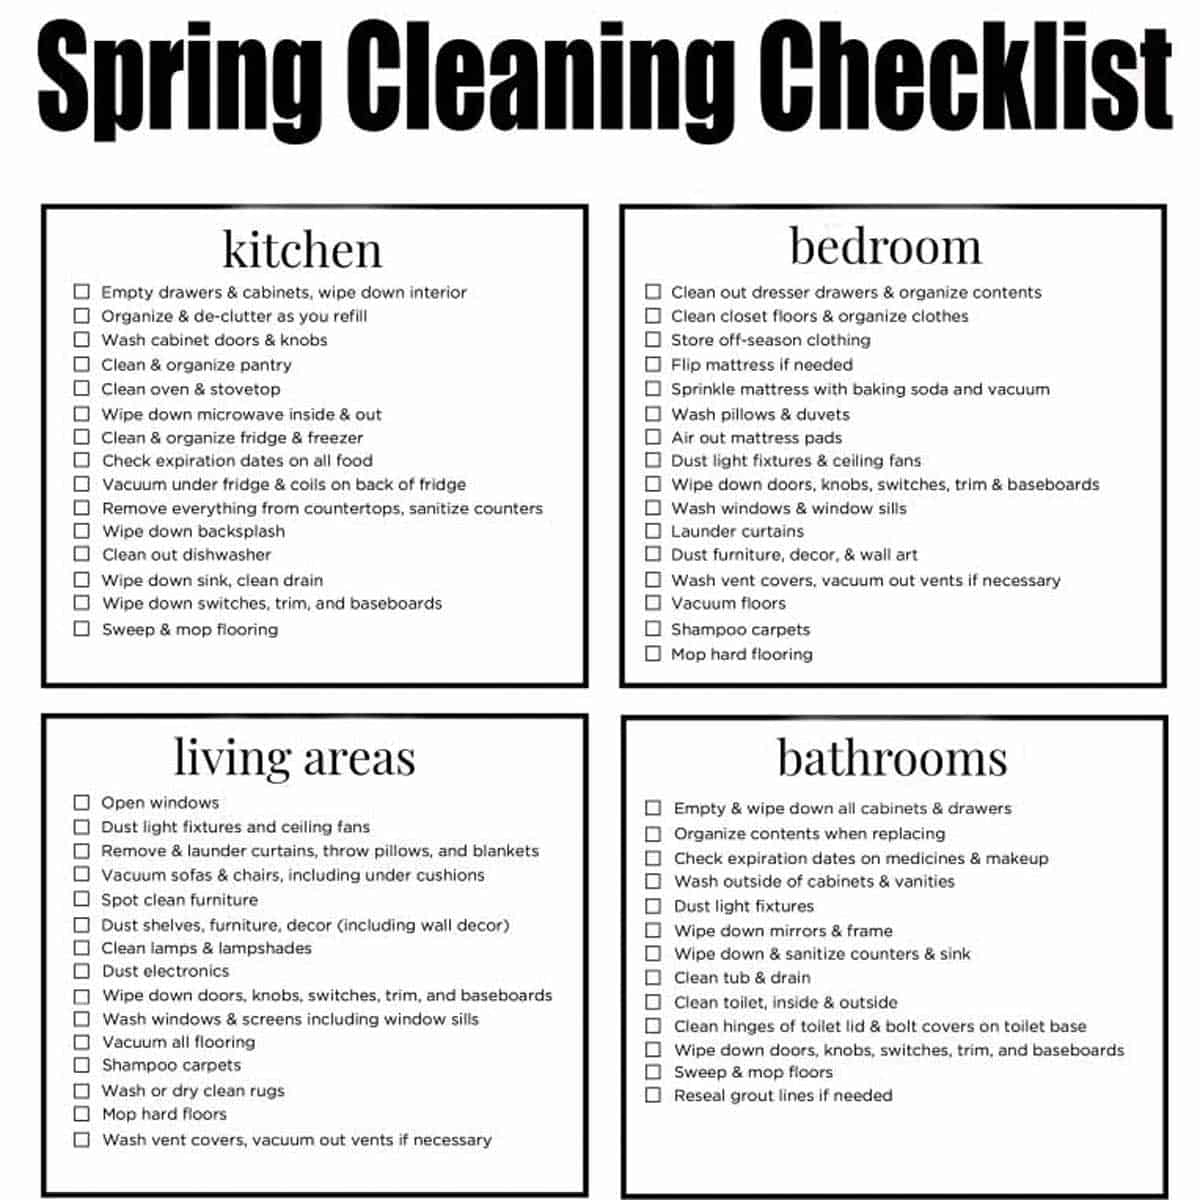 https://thehappierhomemaker.com/wp-content/uploads/2013/03/spring-cleaning-checklist.jpg